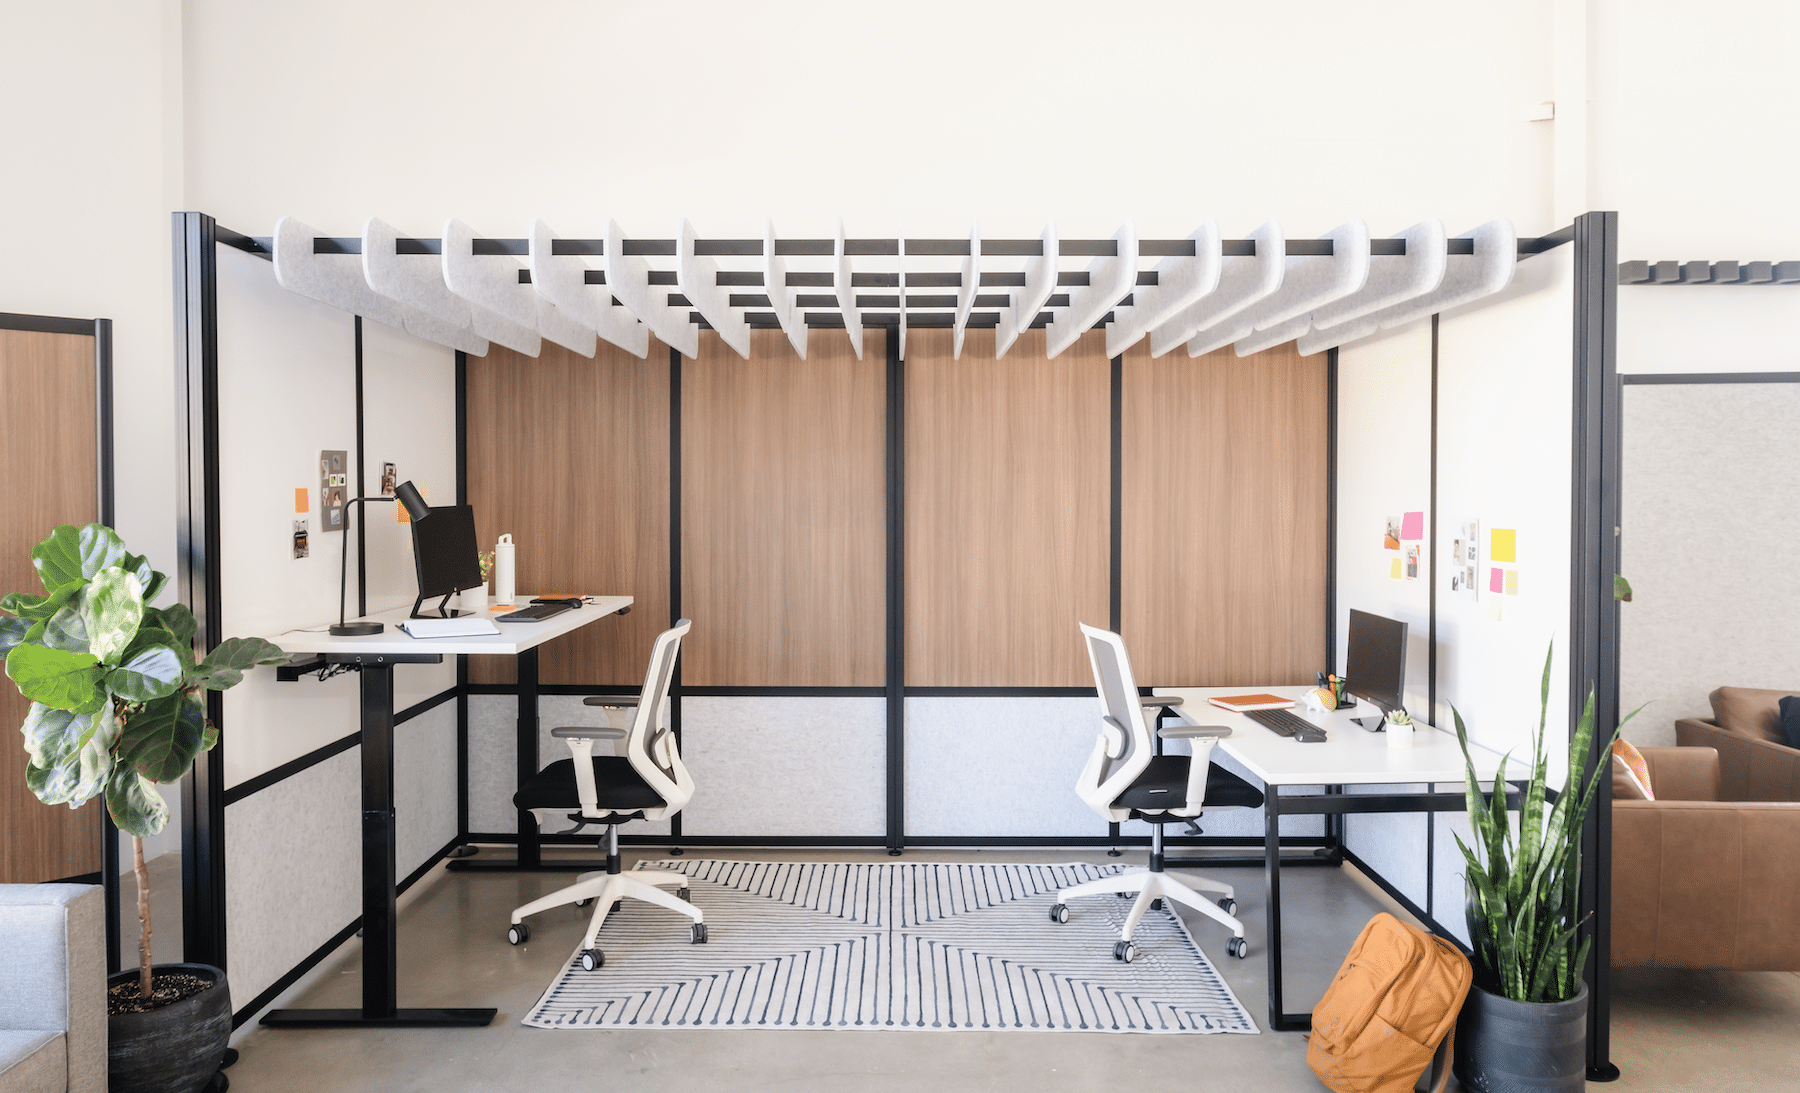 Modern, modular office walls with grey ceiling baffles and 8 walls surrounding 2 employee desks